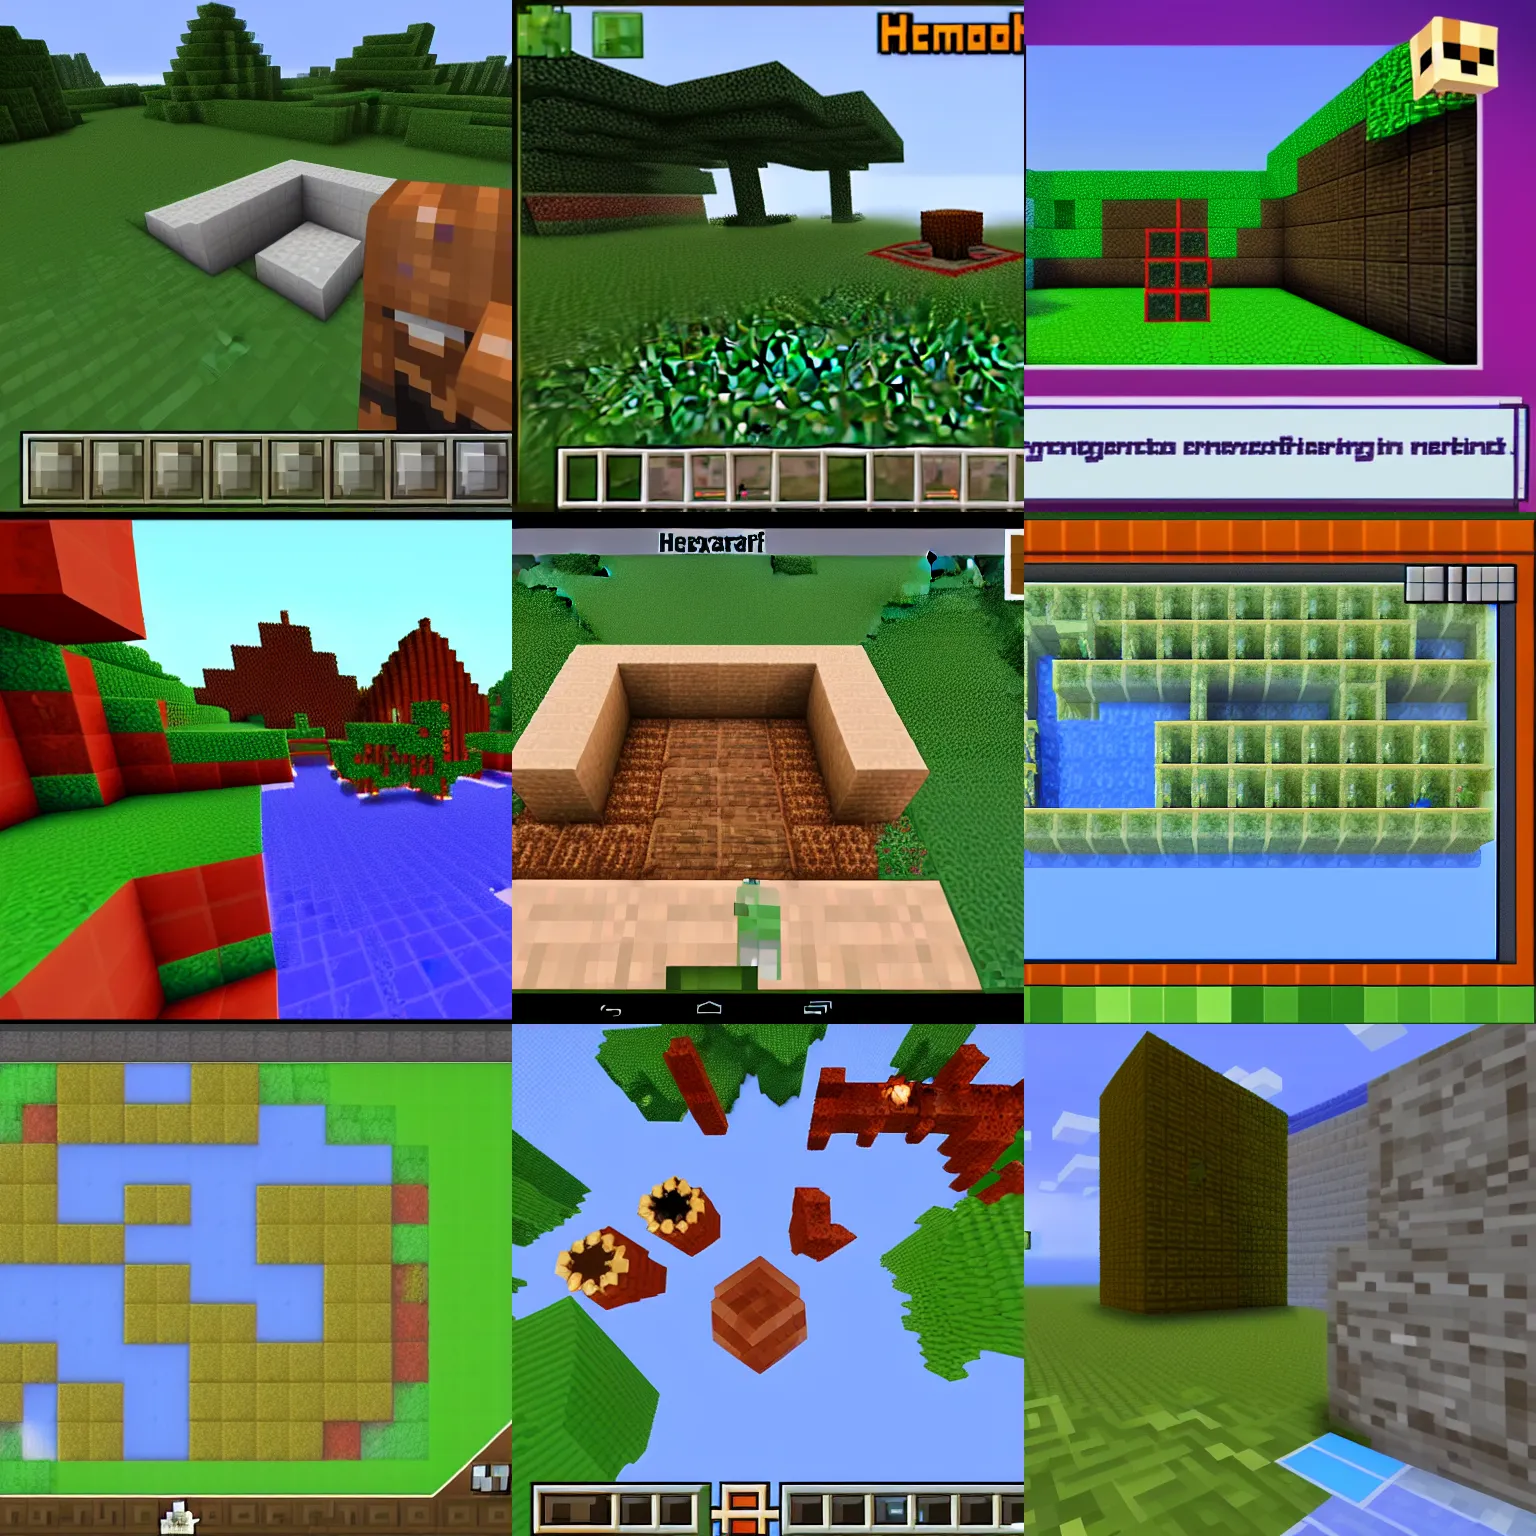 Prompt: in - game screenshot, hexagonal minecraft game